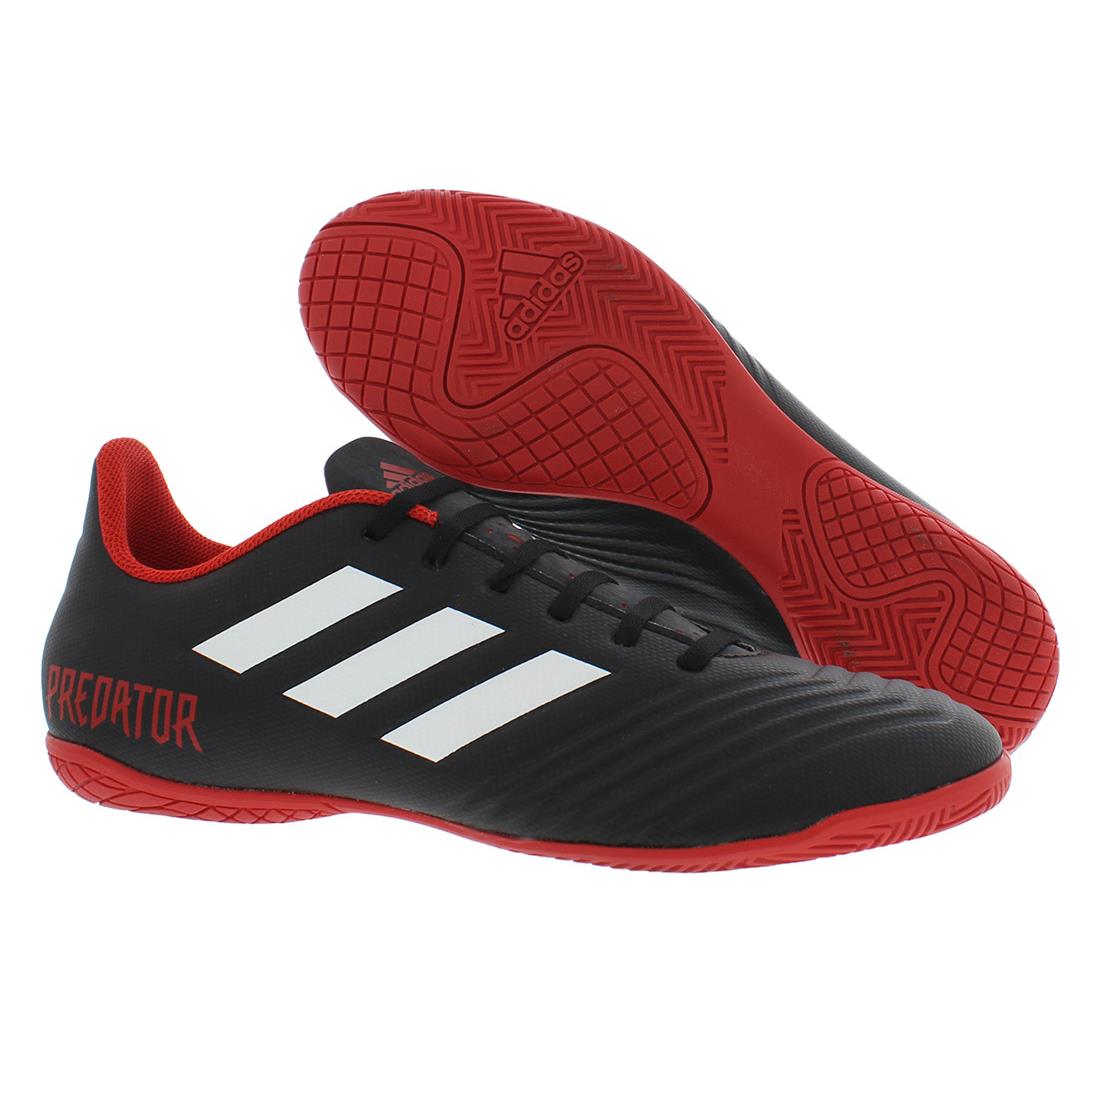 Adidas Predator Tango 18.4 Mens Shoes | 692740564111 shoes - Black/White/Red , Main | SporTipTop